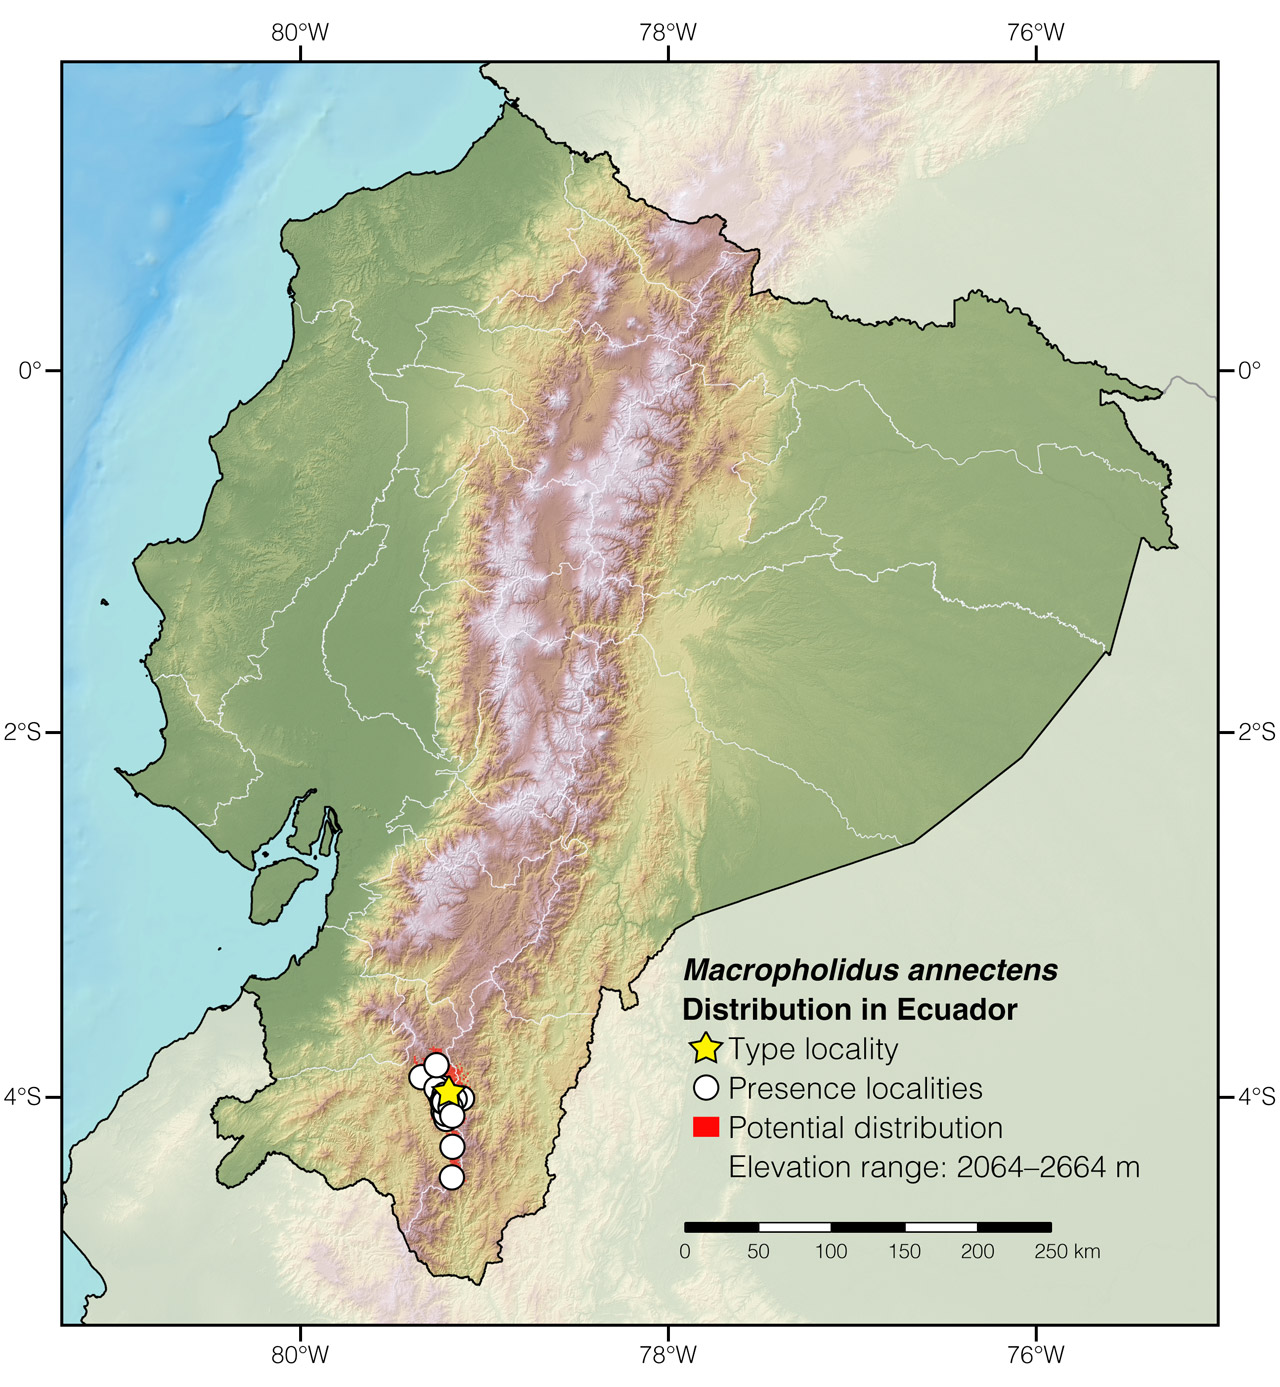 Distribution of Macropholidus annectens in Ecuador